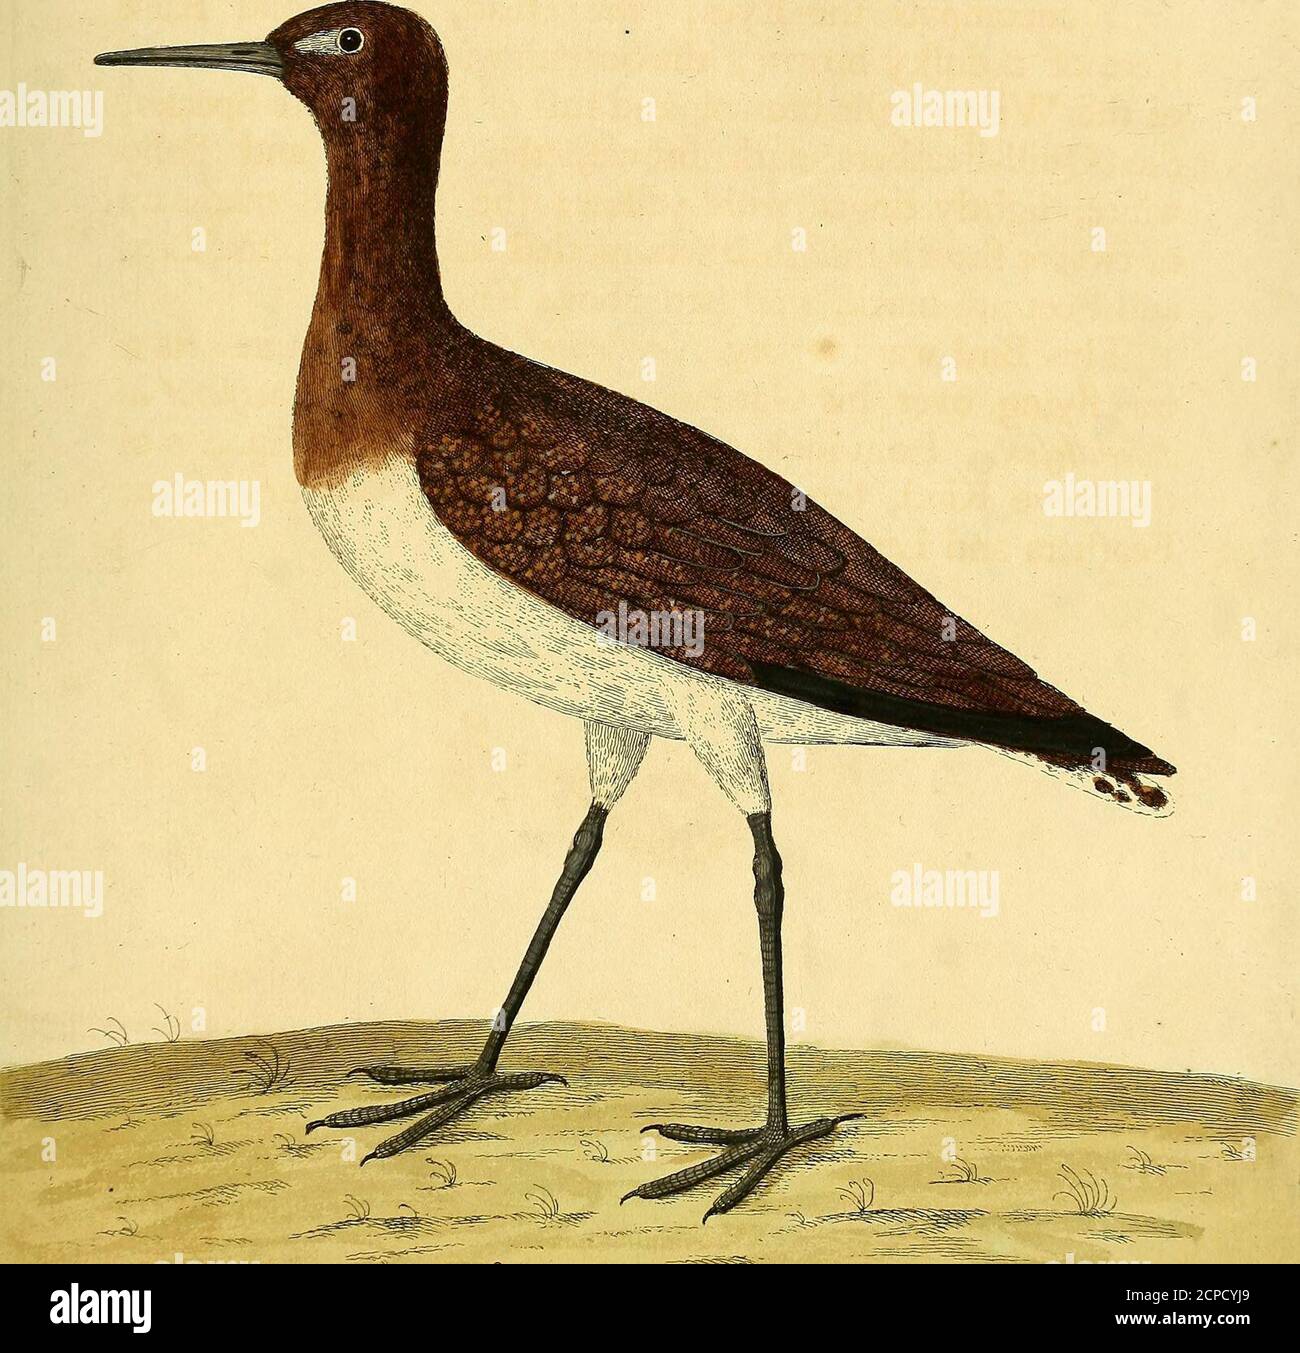 . Historia natural de las aves : ilustrado con cien y un placas de cobre, curiosamente grabado de la vida . El 8.. fy C M/ad i cn/j/&lt;.y&lt; T?affi4.ay! I?A a?i?e. A f?m?a. S/: Cijy. C,0. Foto de stock